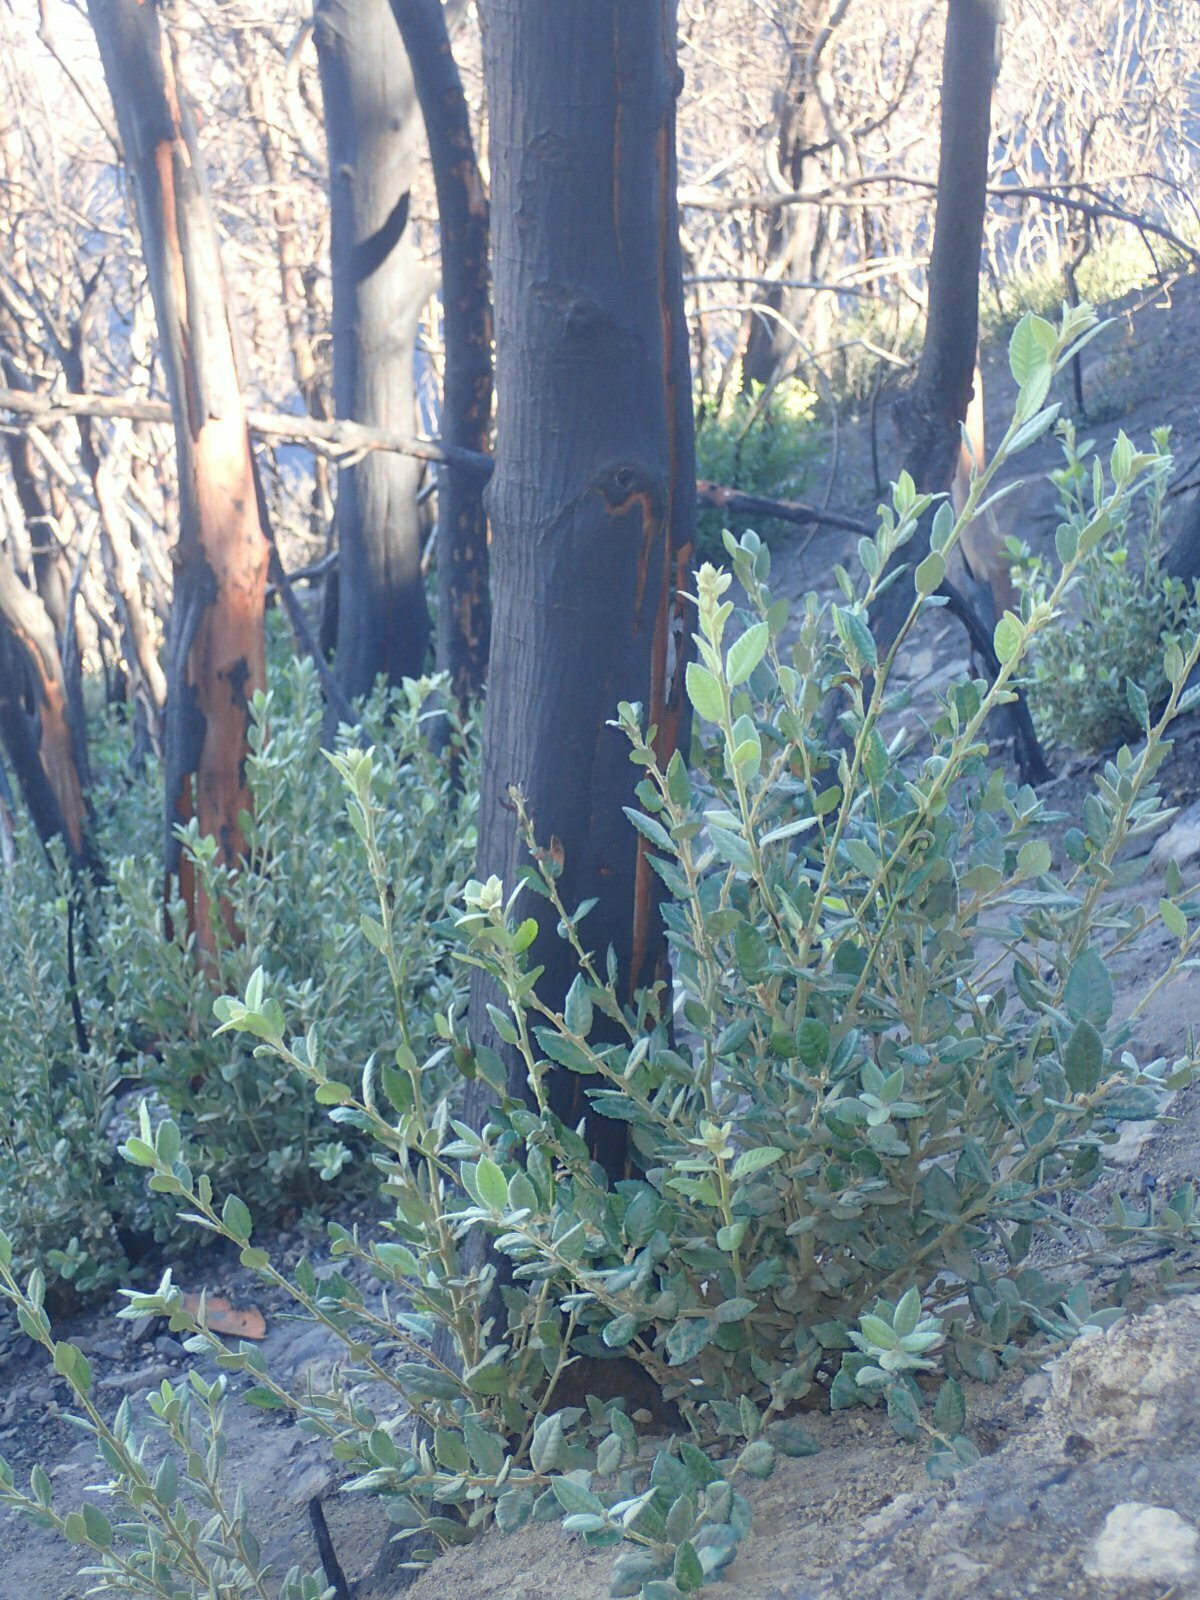 High Resolution Notholithocarpus densiflorus Fire recovery